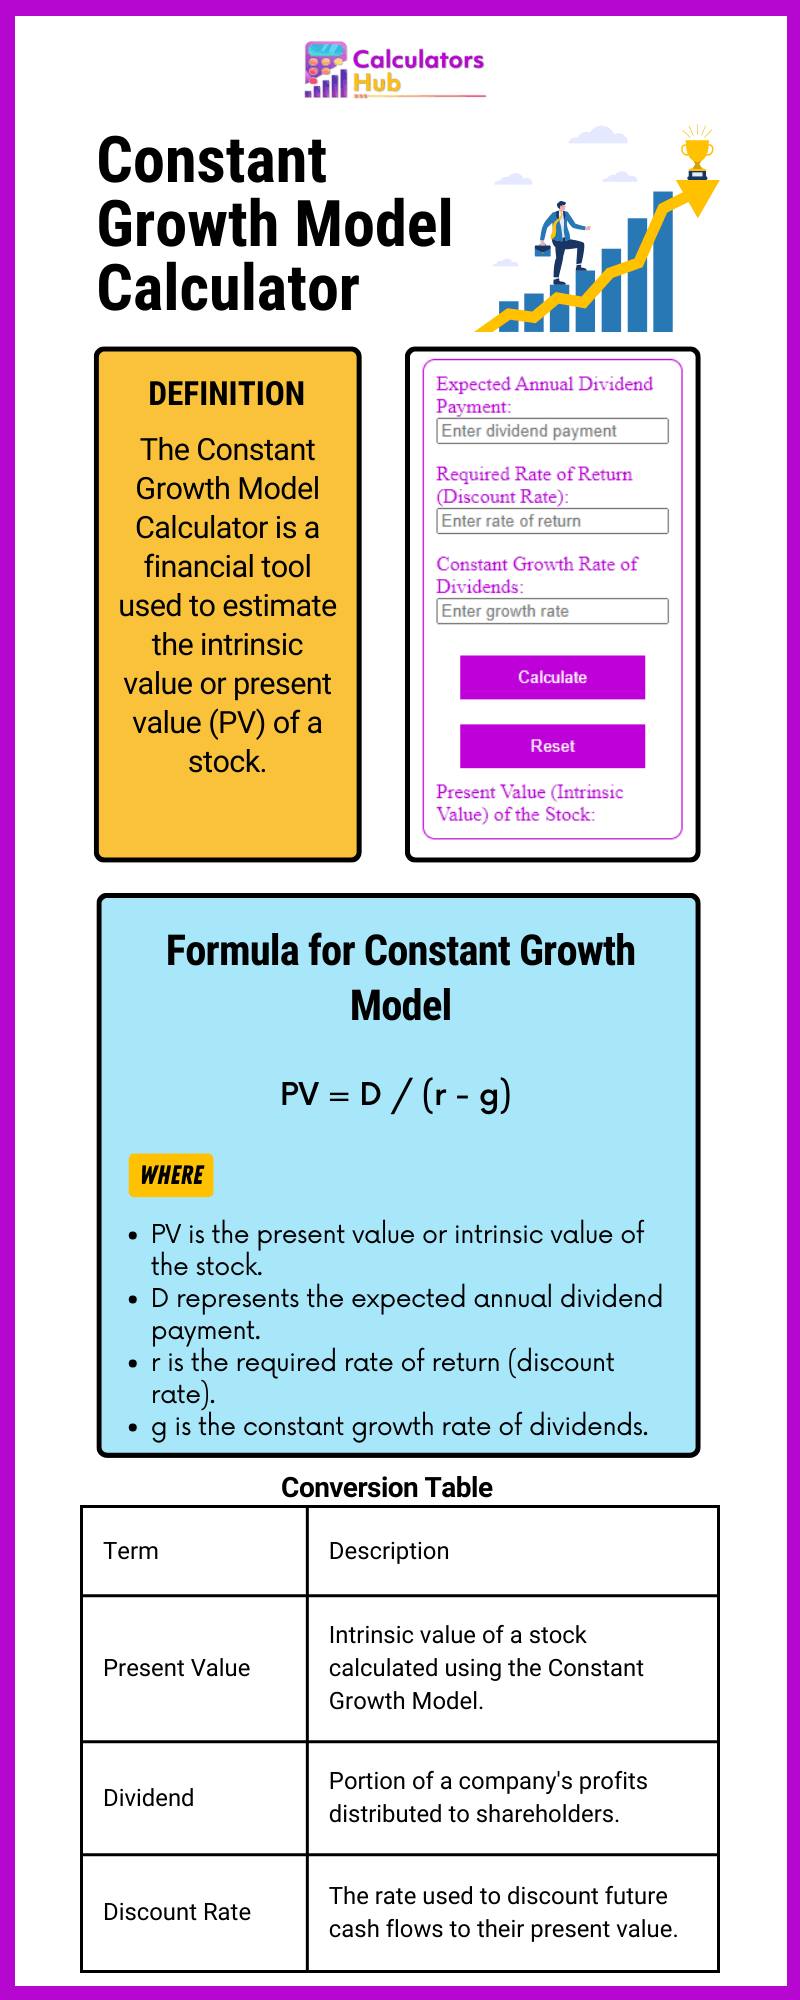 Constant Growth Model Calculator